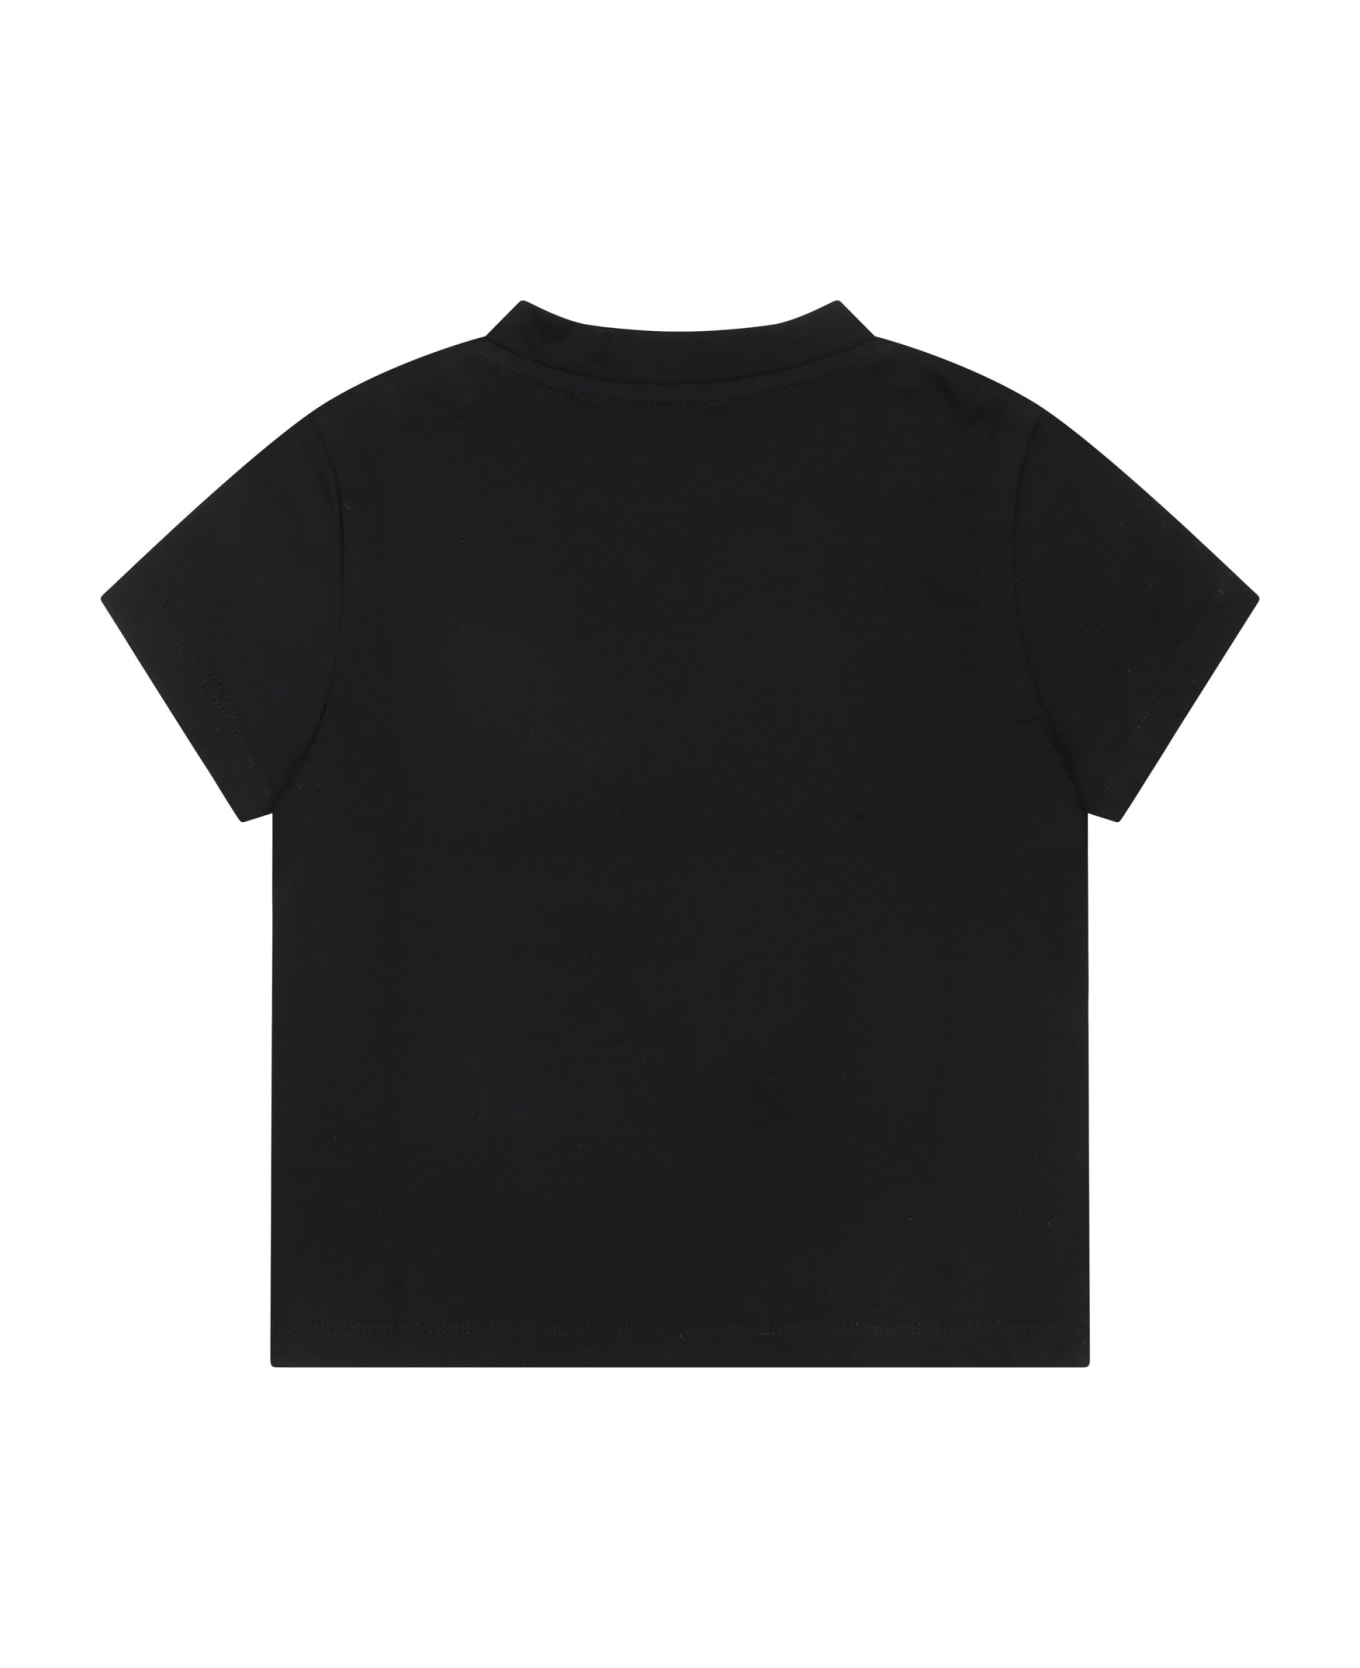 Balmain Black T-shirt For Baby Girl With Logo And Rhinestone - Black